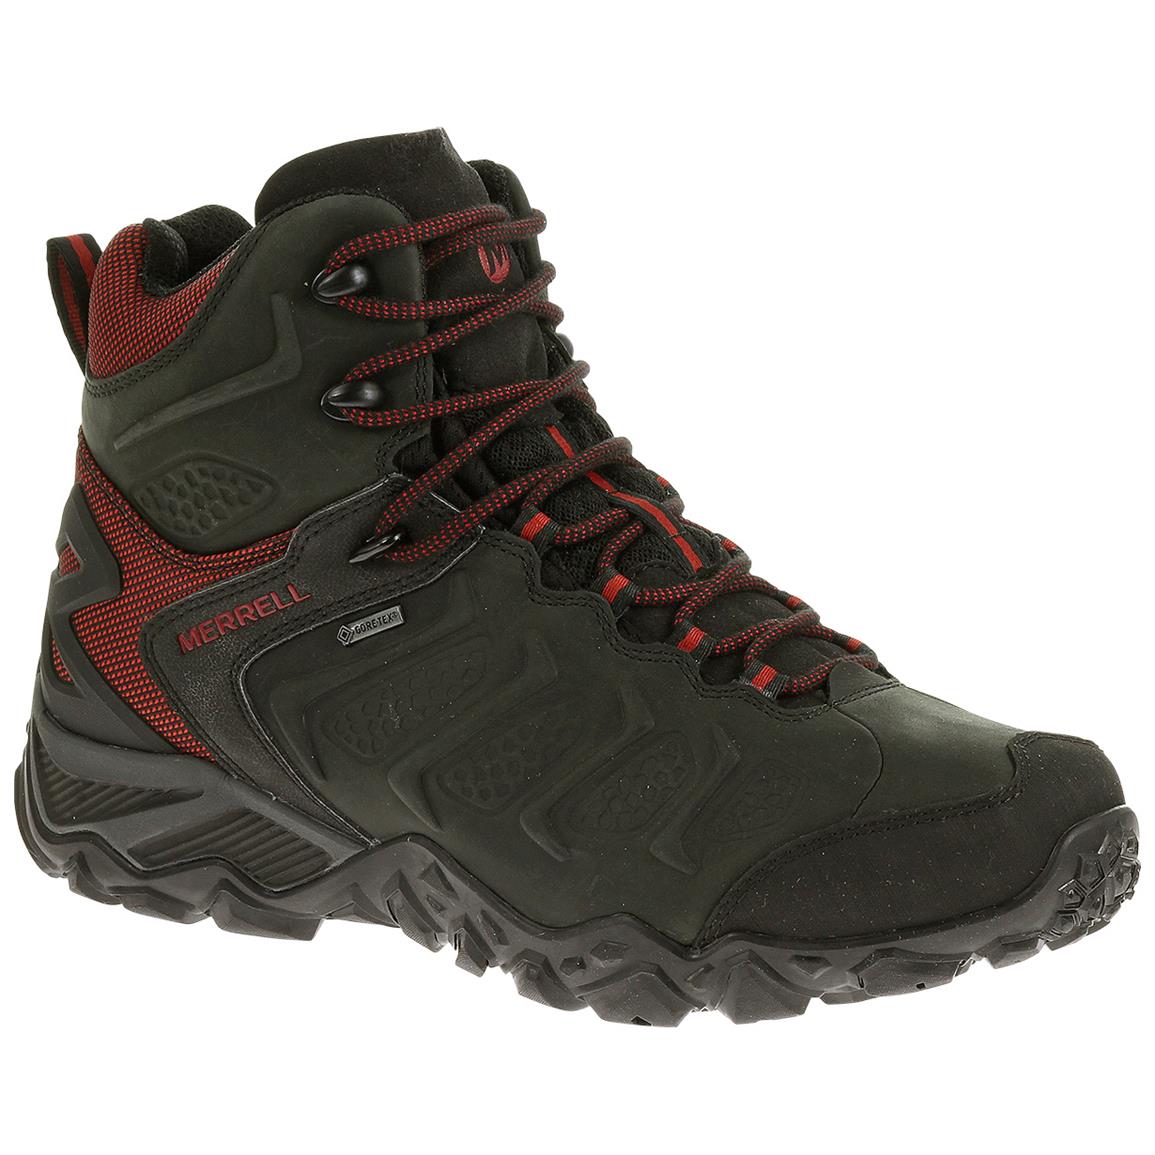 Merrell Chameleon Shift Waterproof Mid Hiking Boots - 643857, Hiking ...